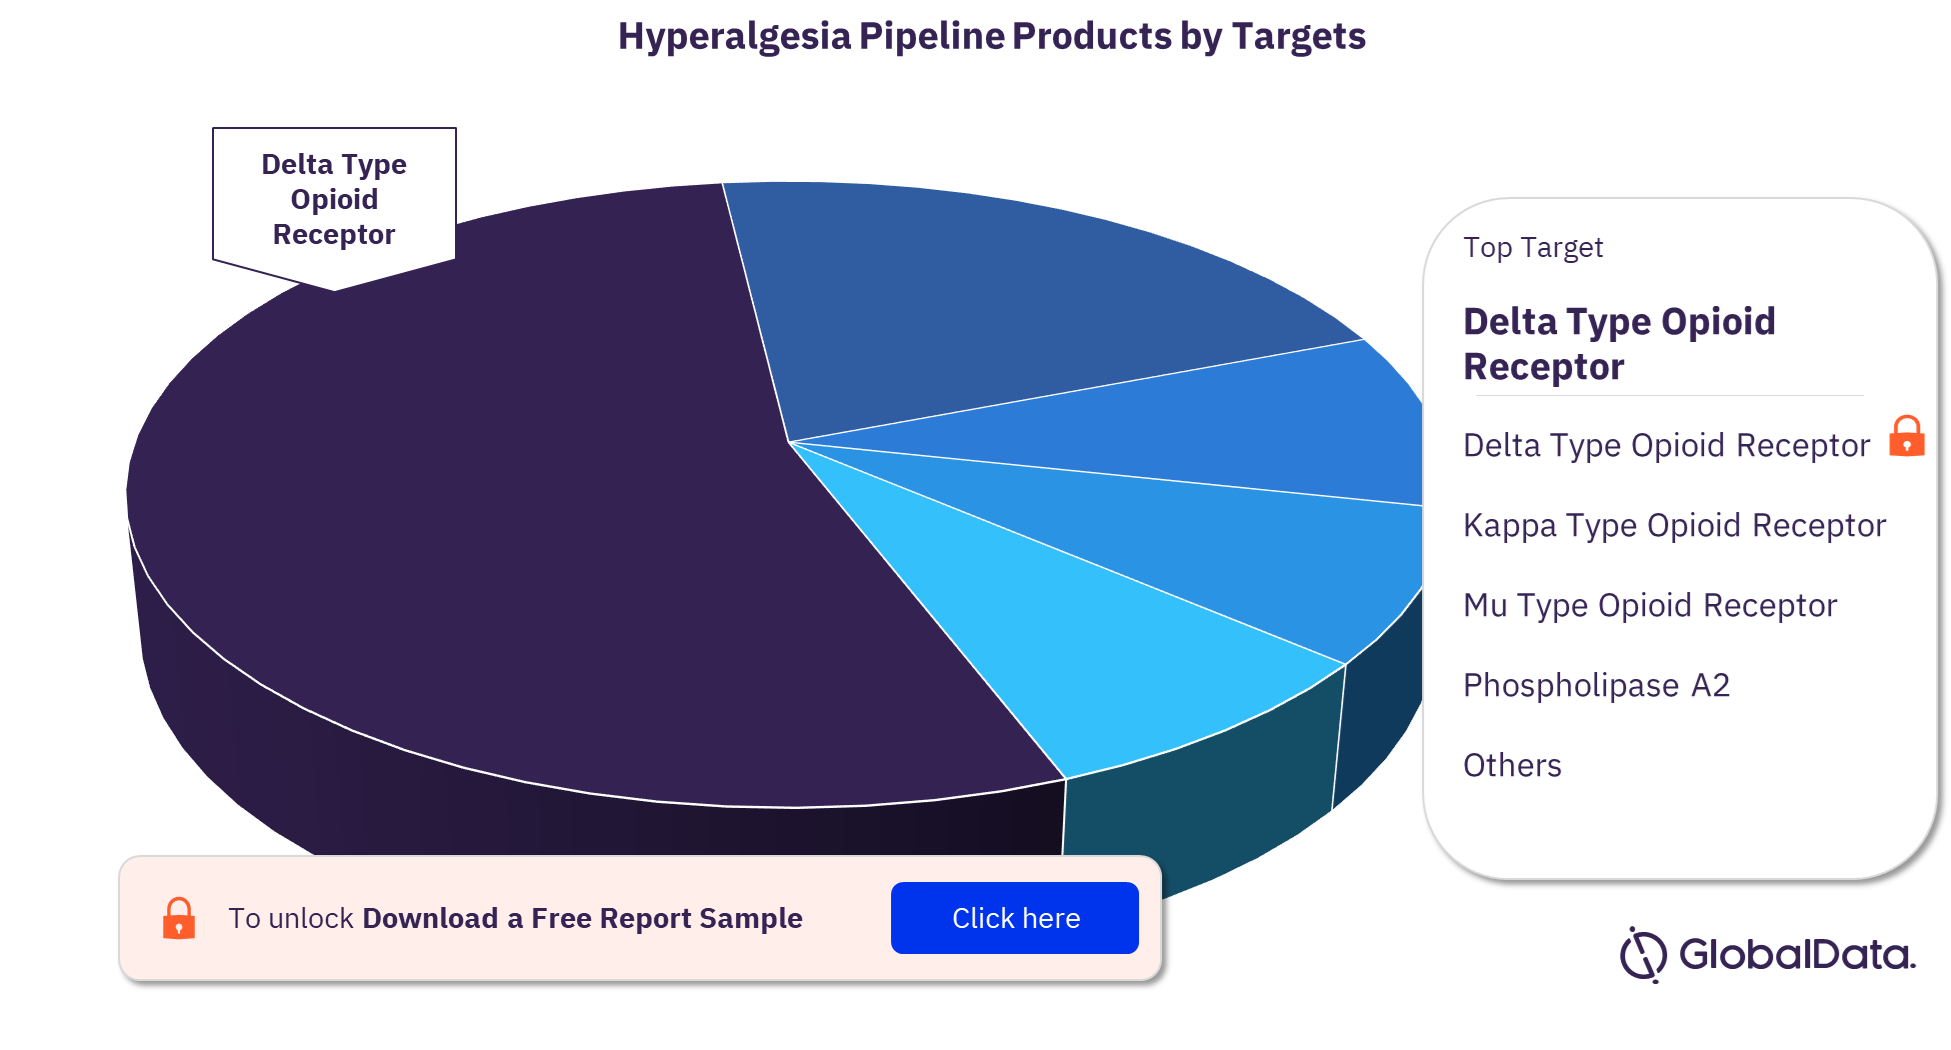 Hyperalgesia pipeline drugs market, by targets